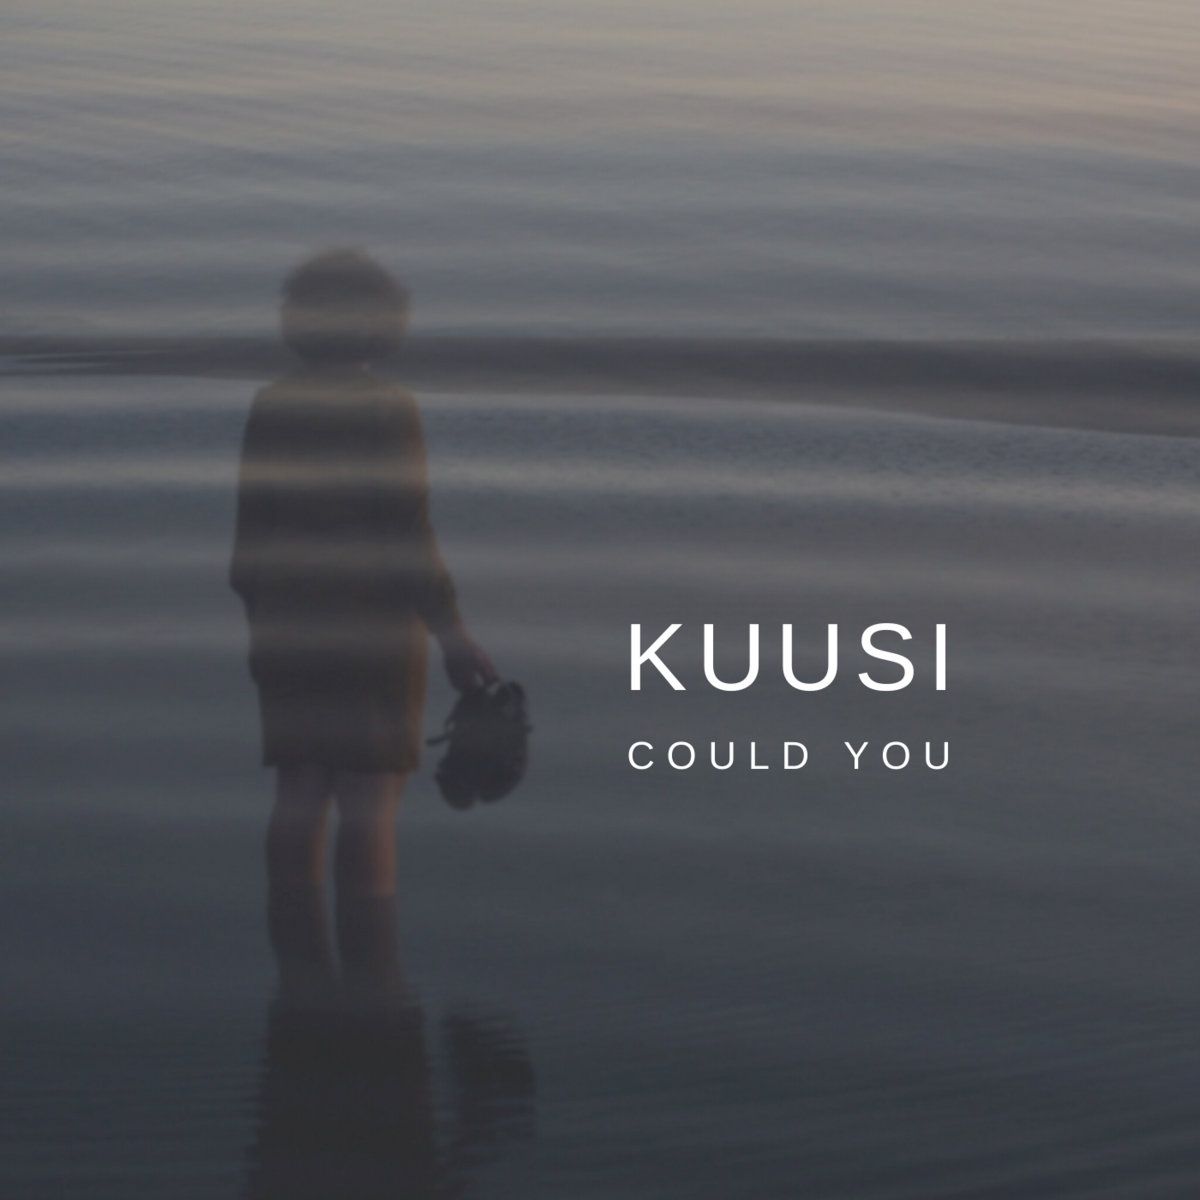 Kuusi - Could You